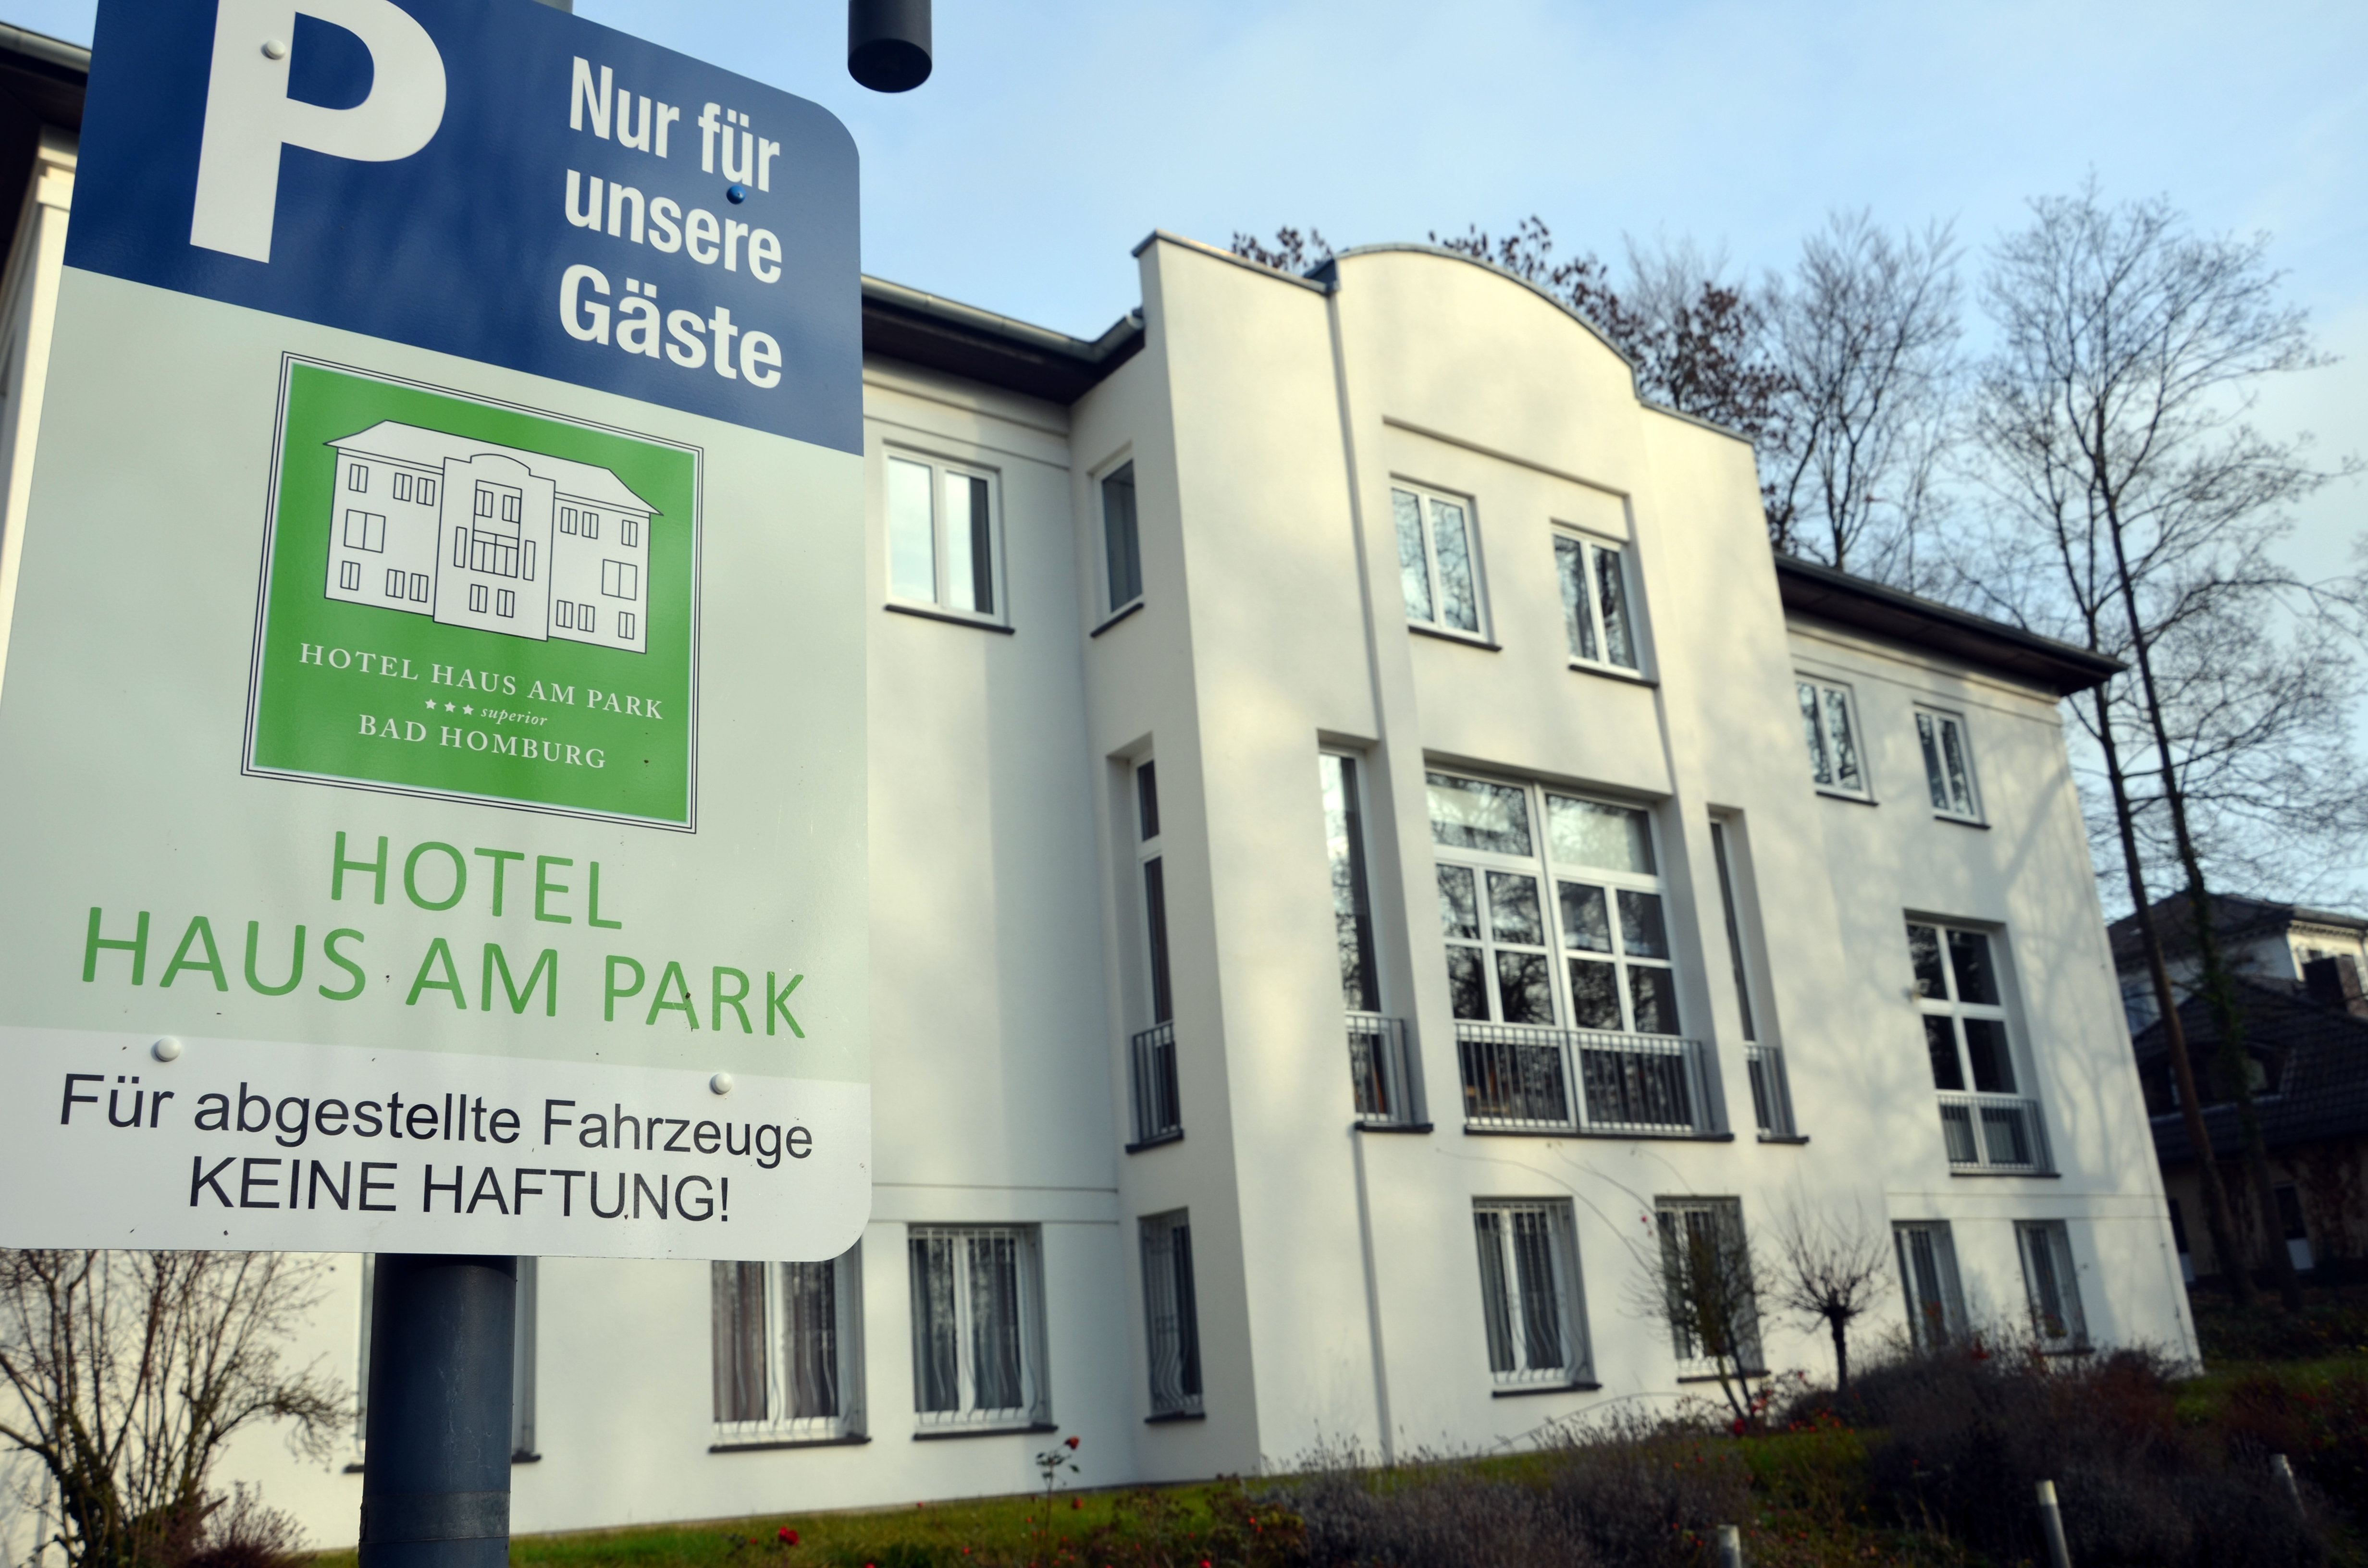 31 HQ Photos Hotel Haus Am Park Bad Homburg / Hotel Villa